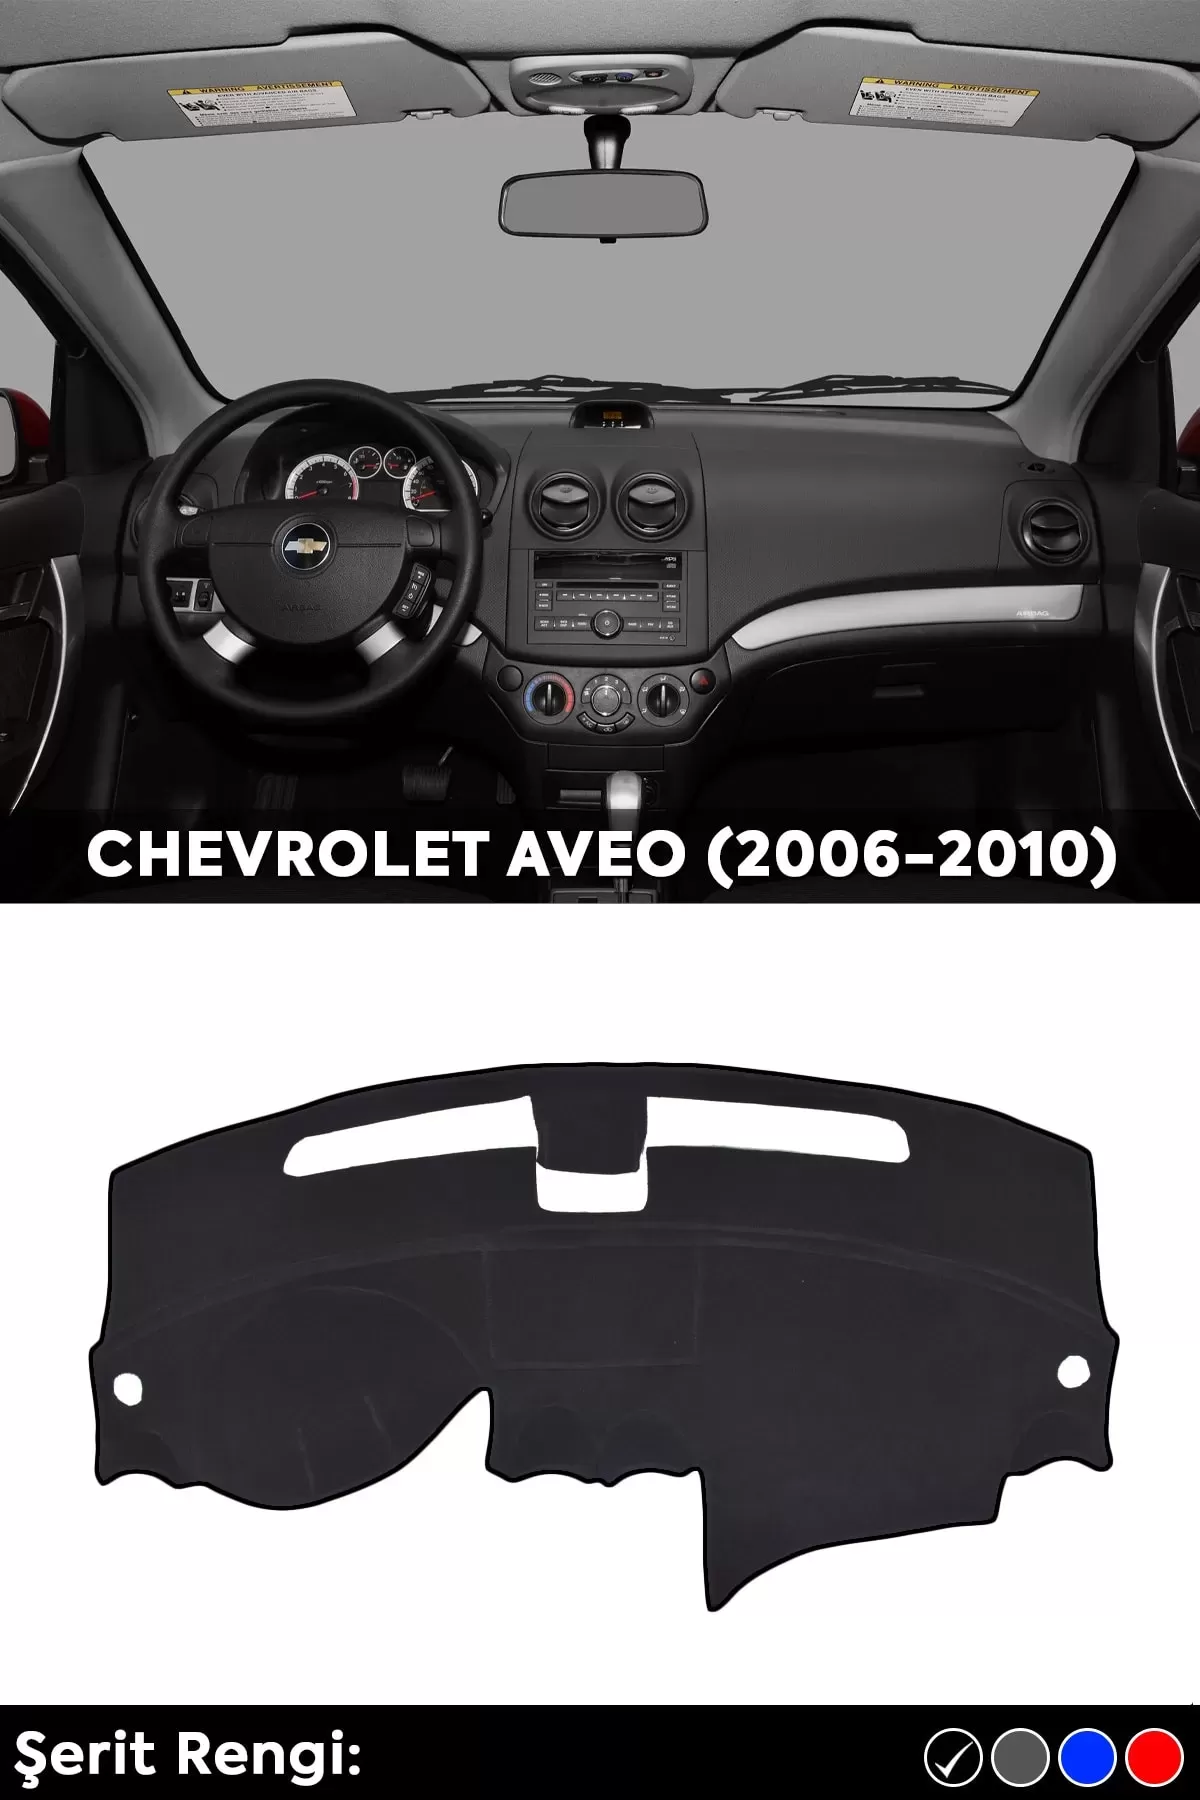 Chevrolet Aveo (2006-2010) 3d Torpido Koruma Kılıfı - Ön Göğüs Kaplama - Siyah Şerit